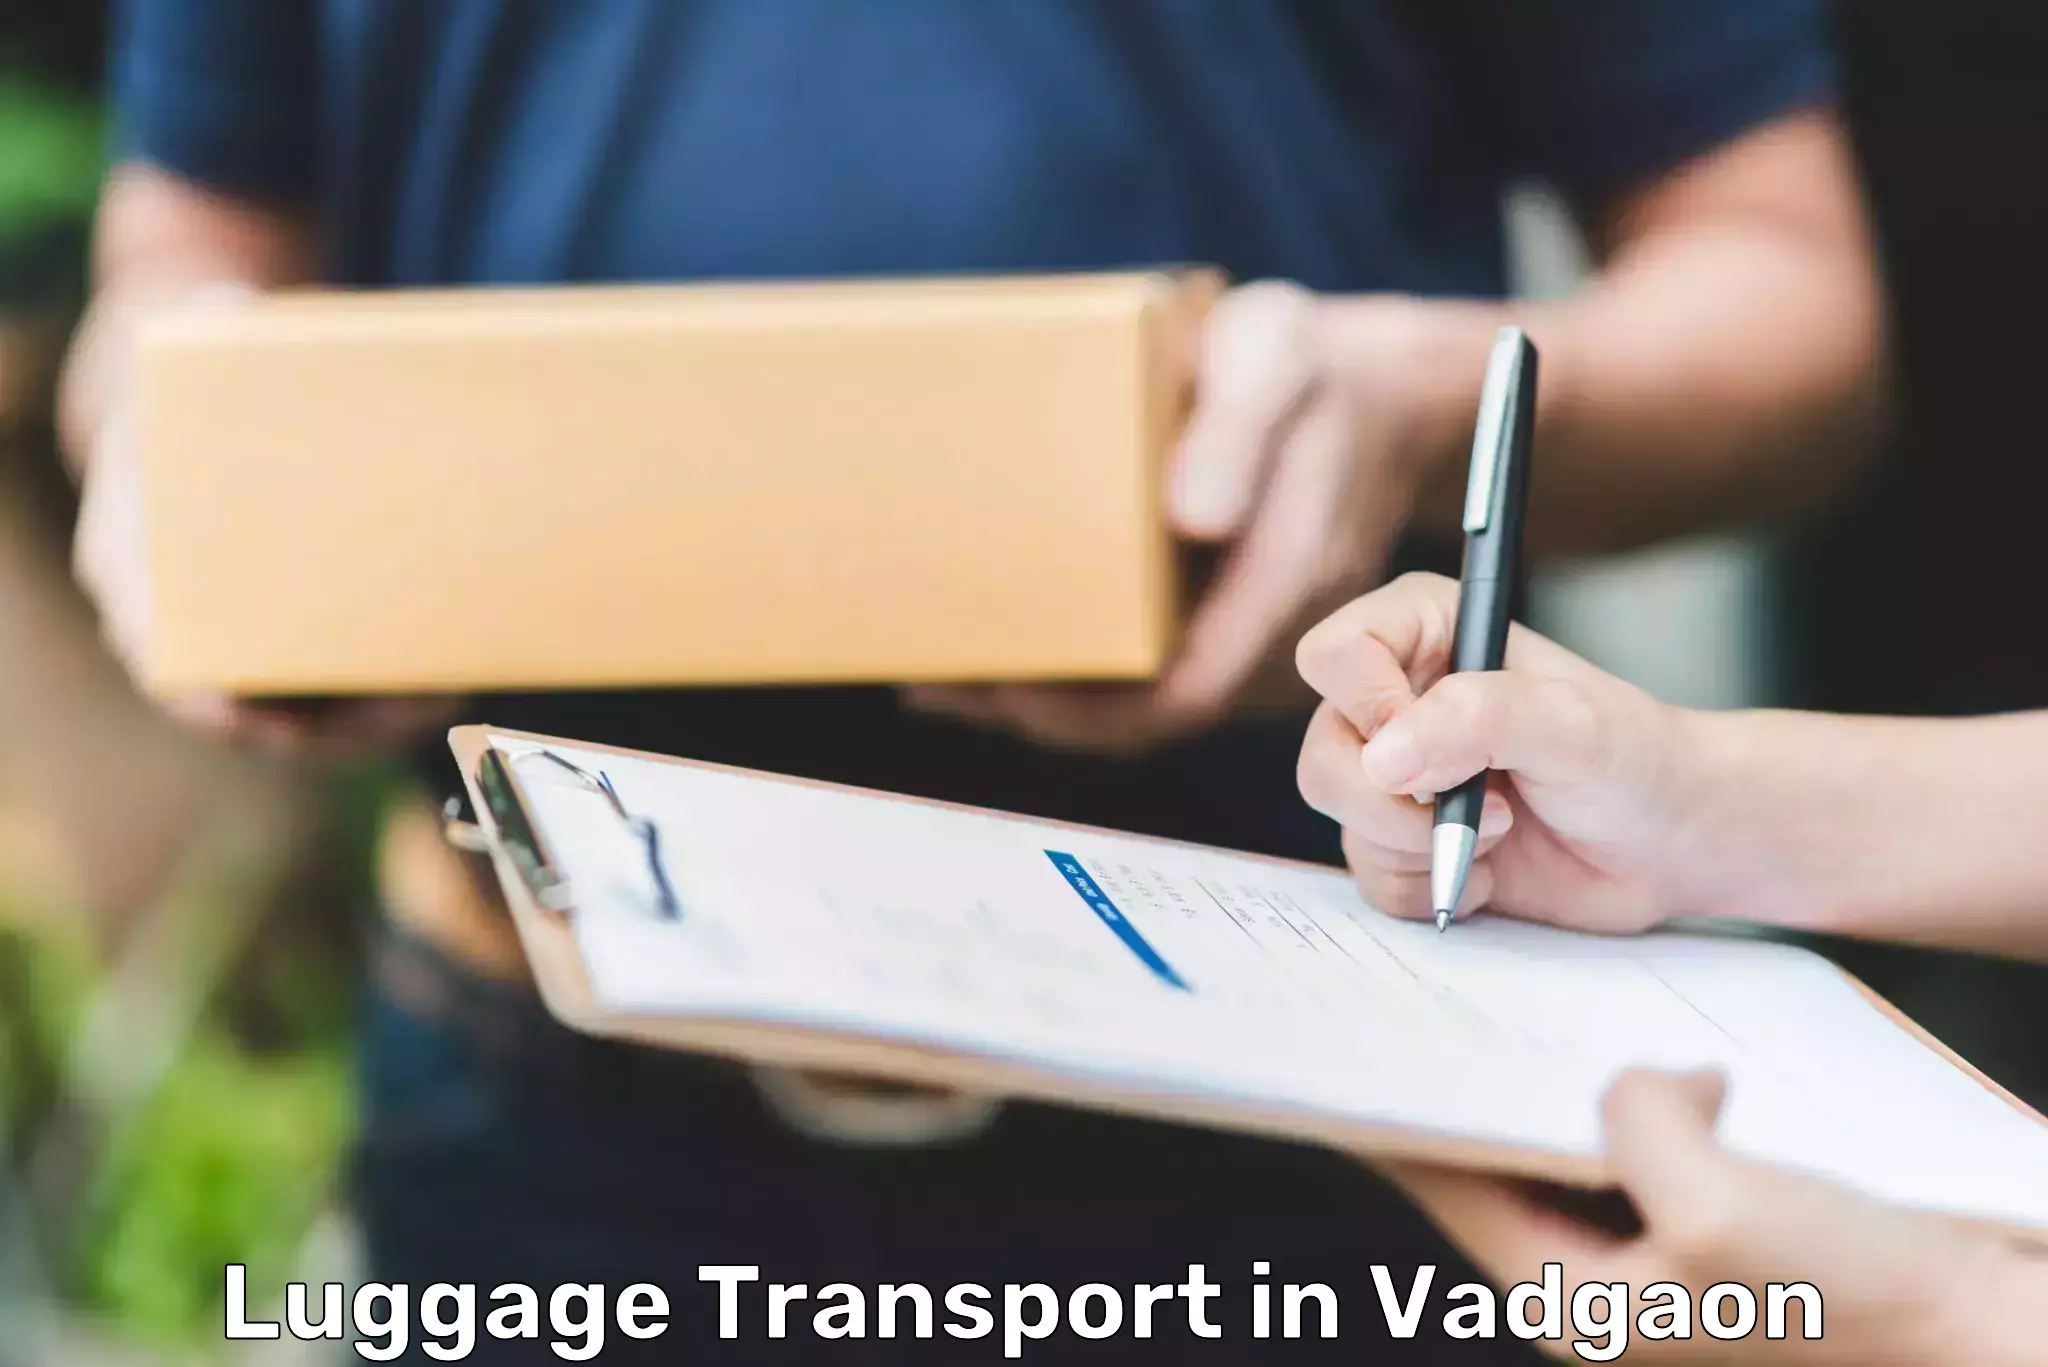 Luggage transit service in Vadgaon